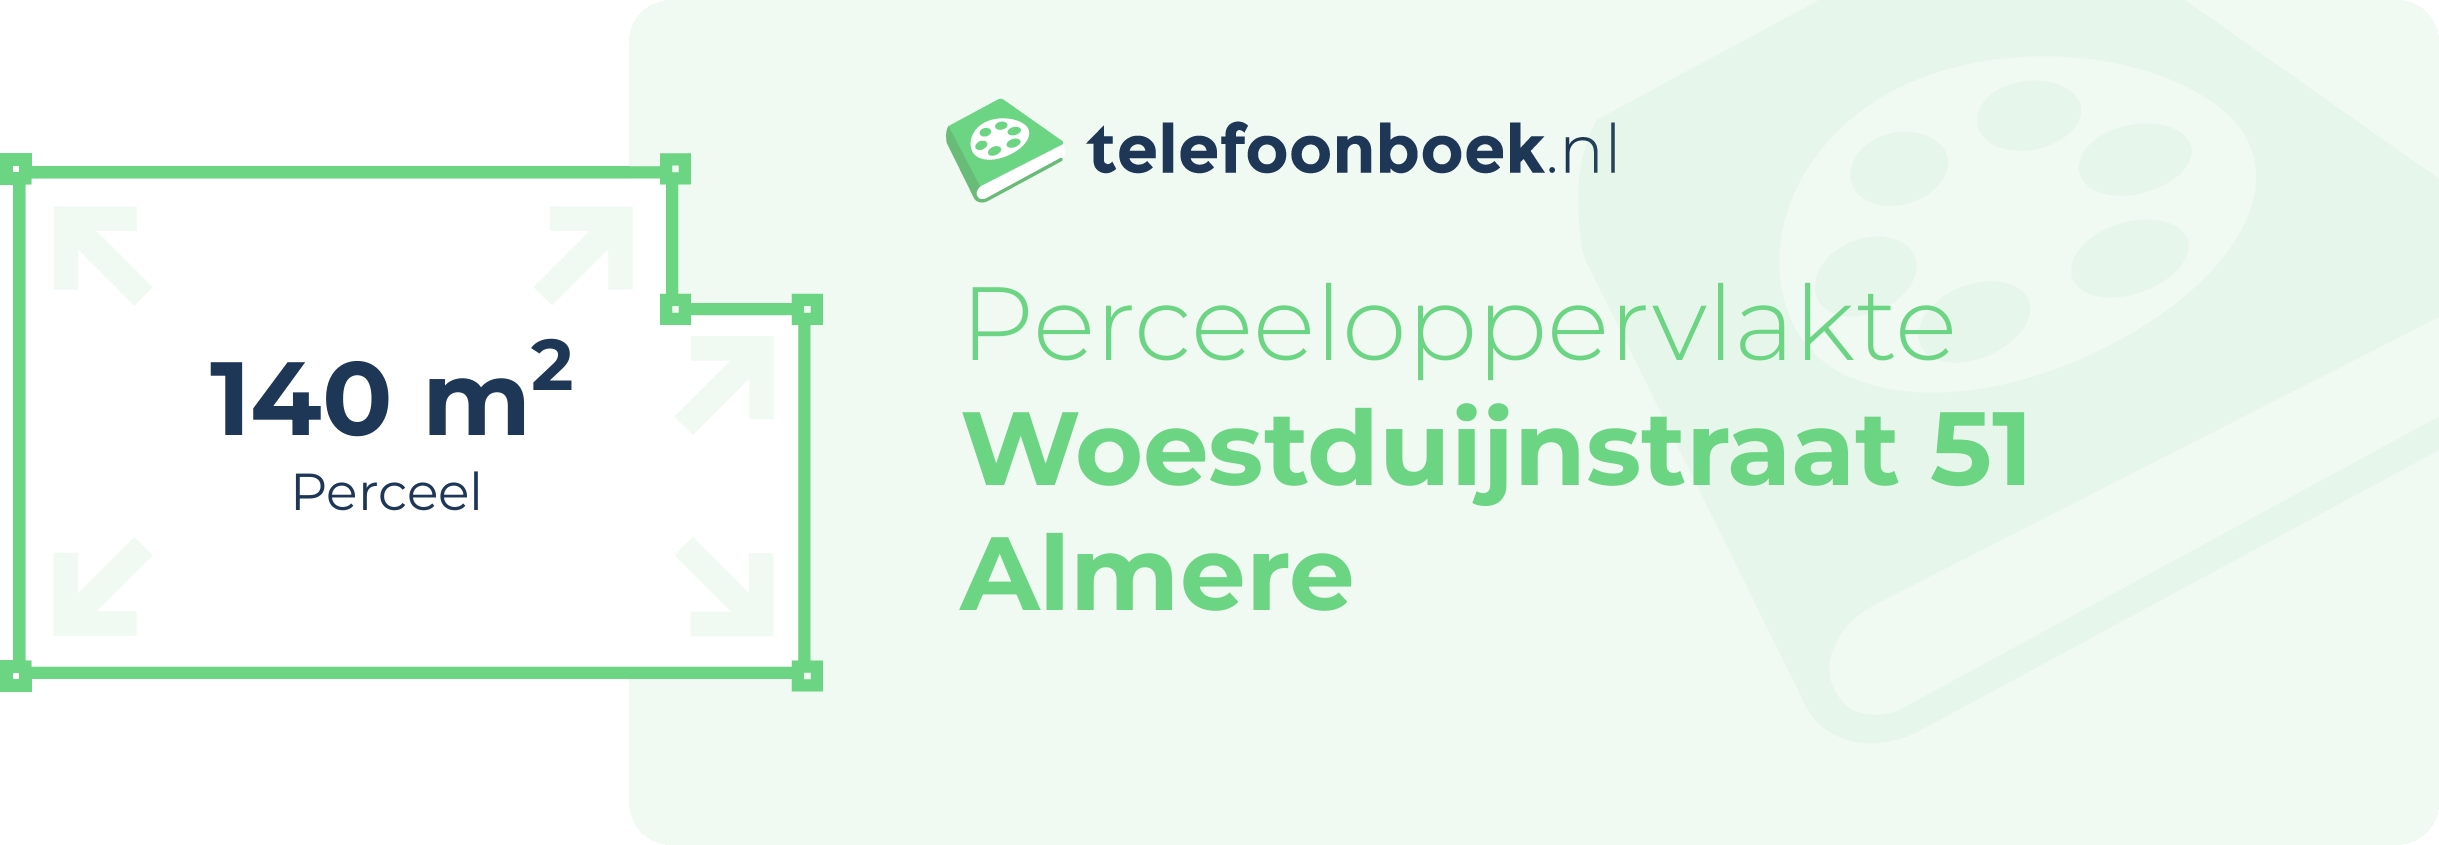 Perceeloppervlakte Woestduijnstraat 51 Almere